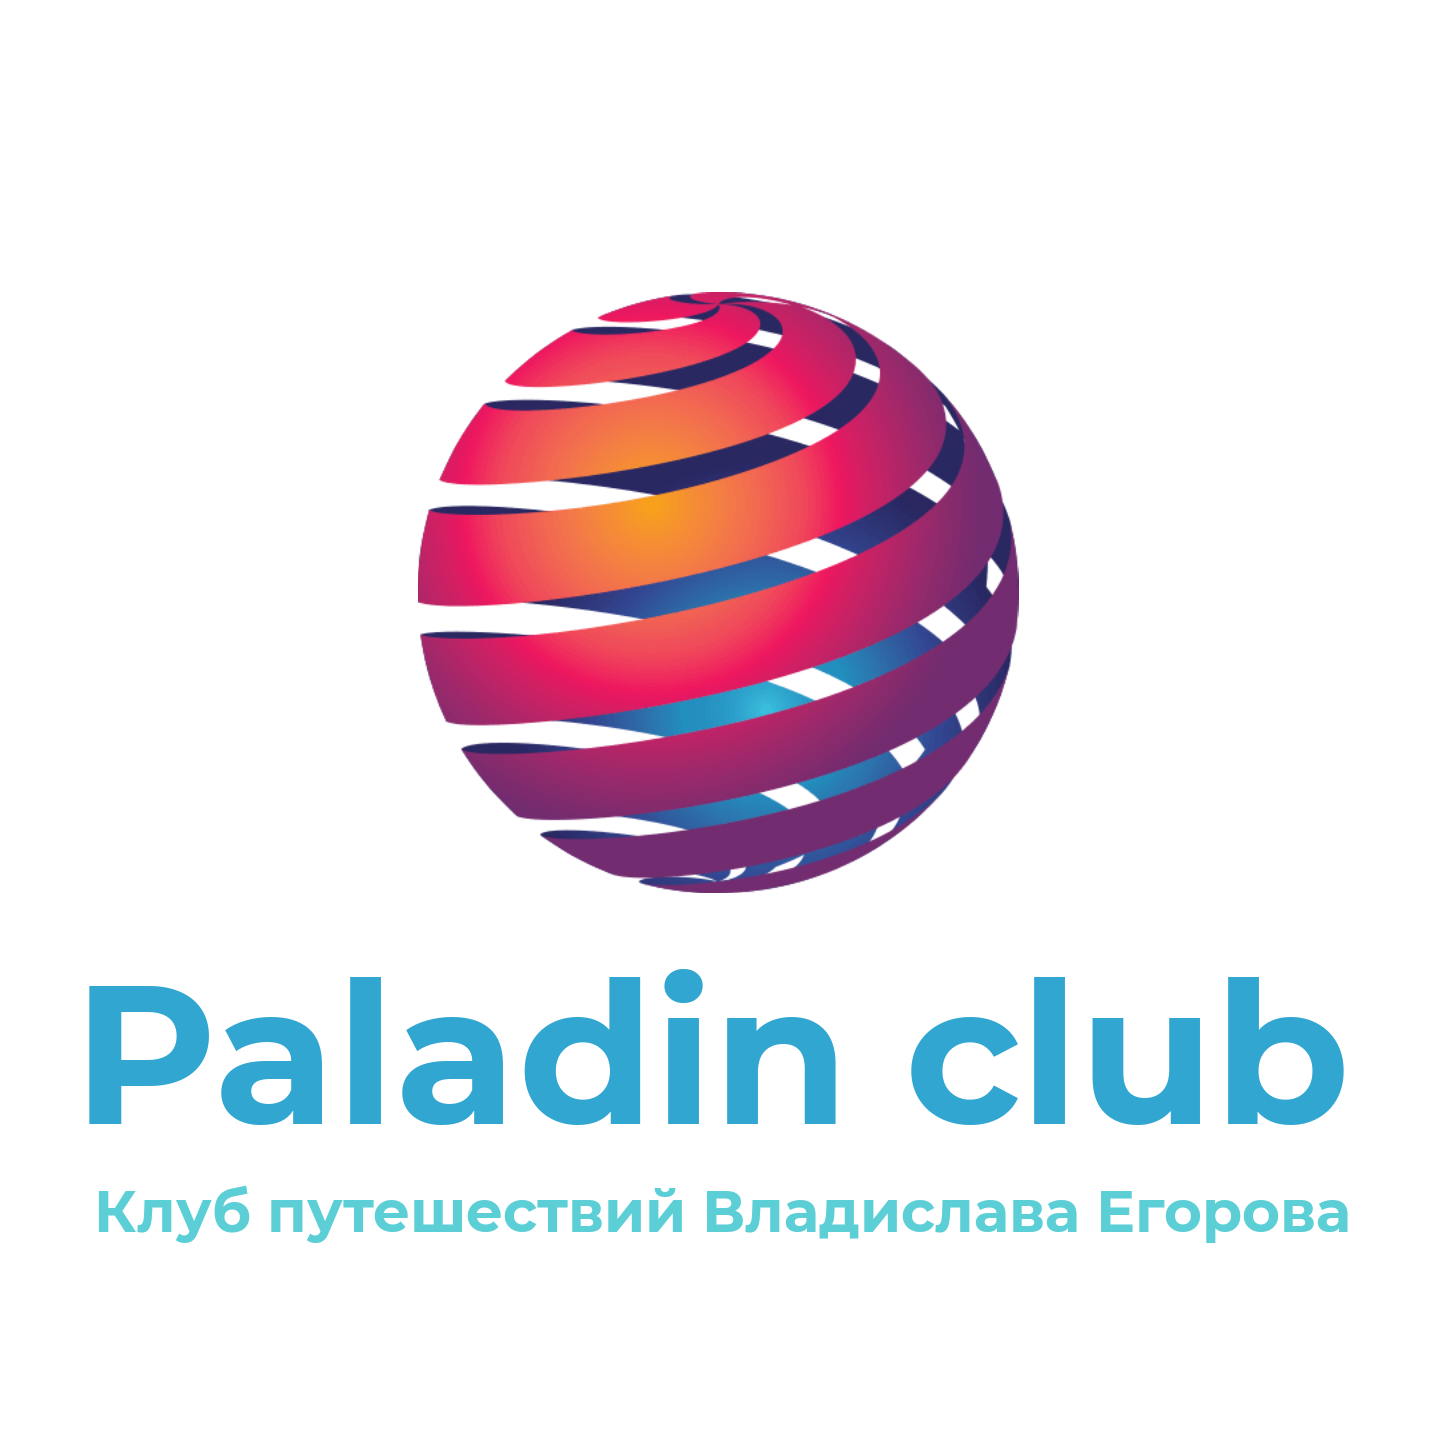 PALADIN CLUB